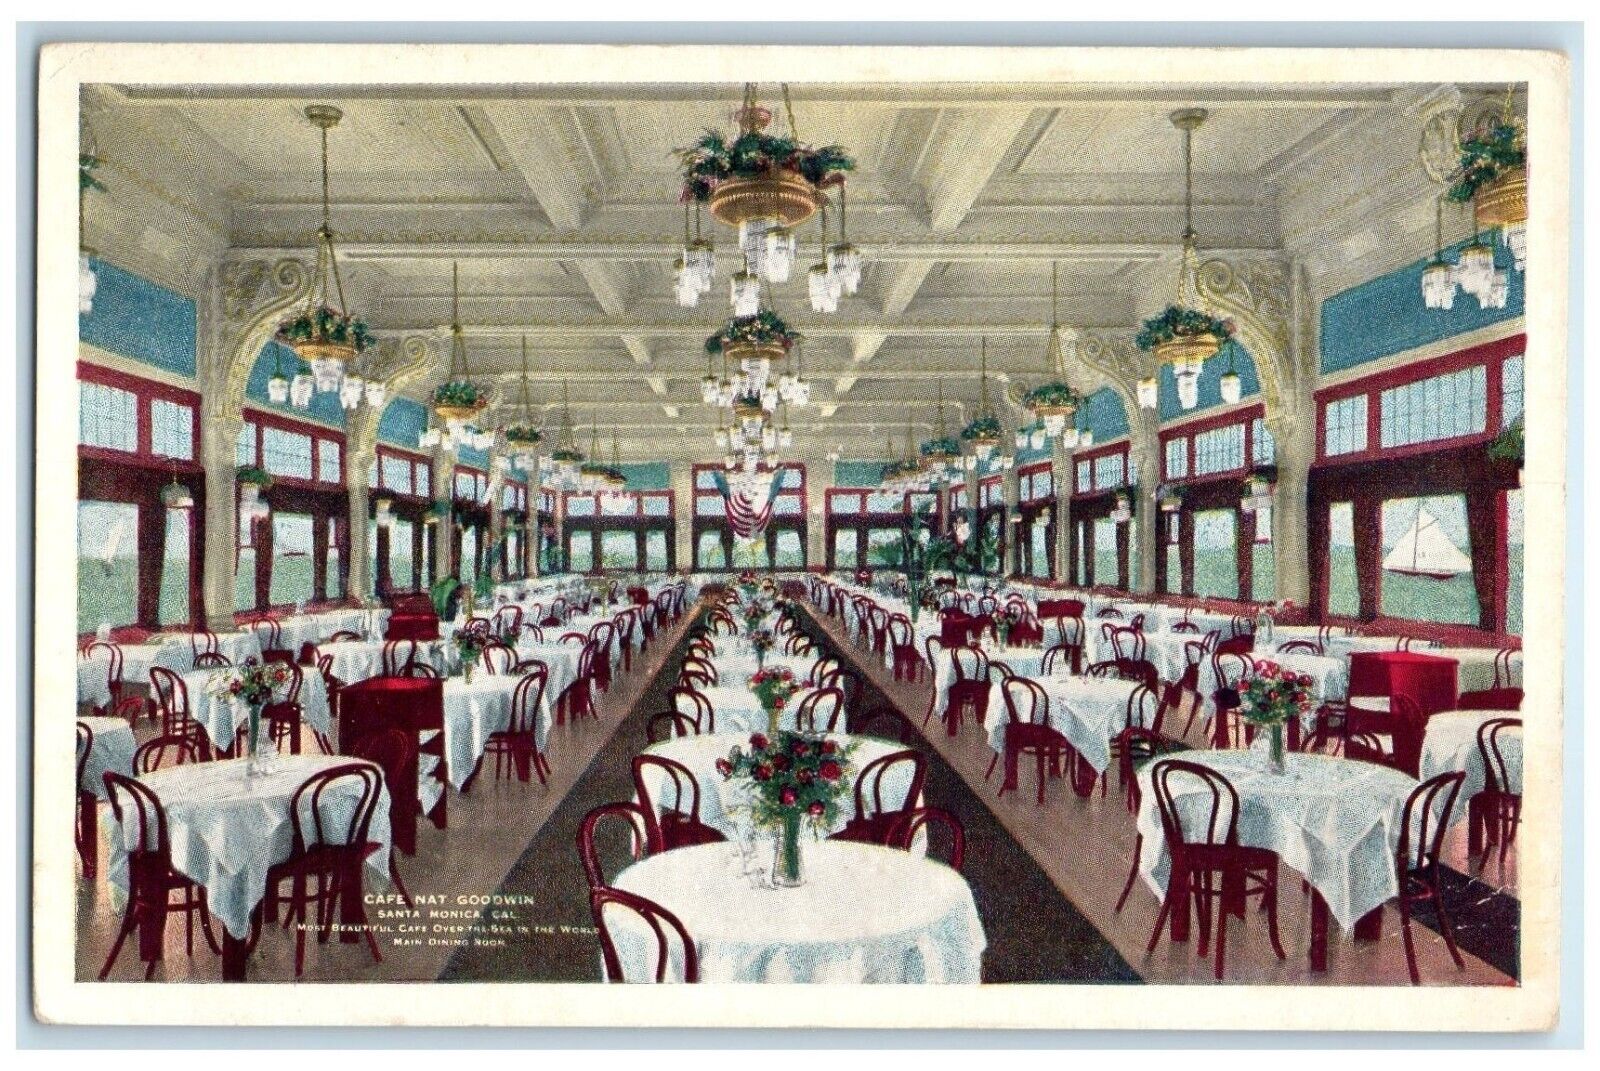 c1930's Cafe Nat Goodwin Dining Room Santa Monica California CA Vintage Postcard